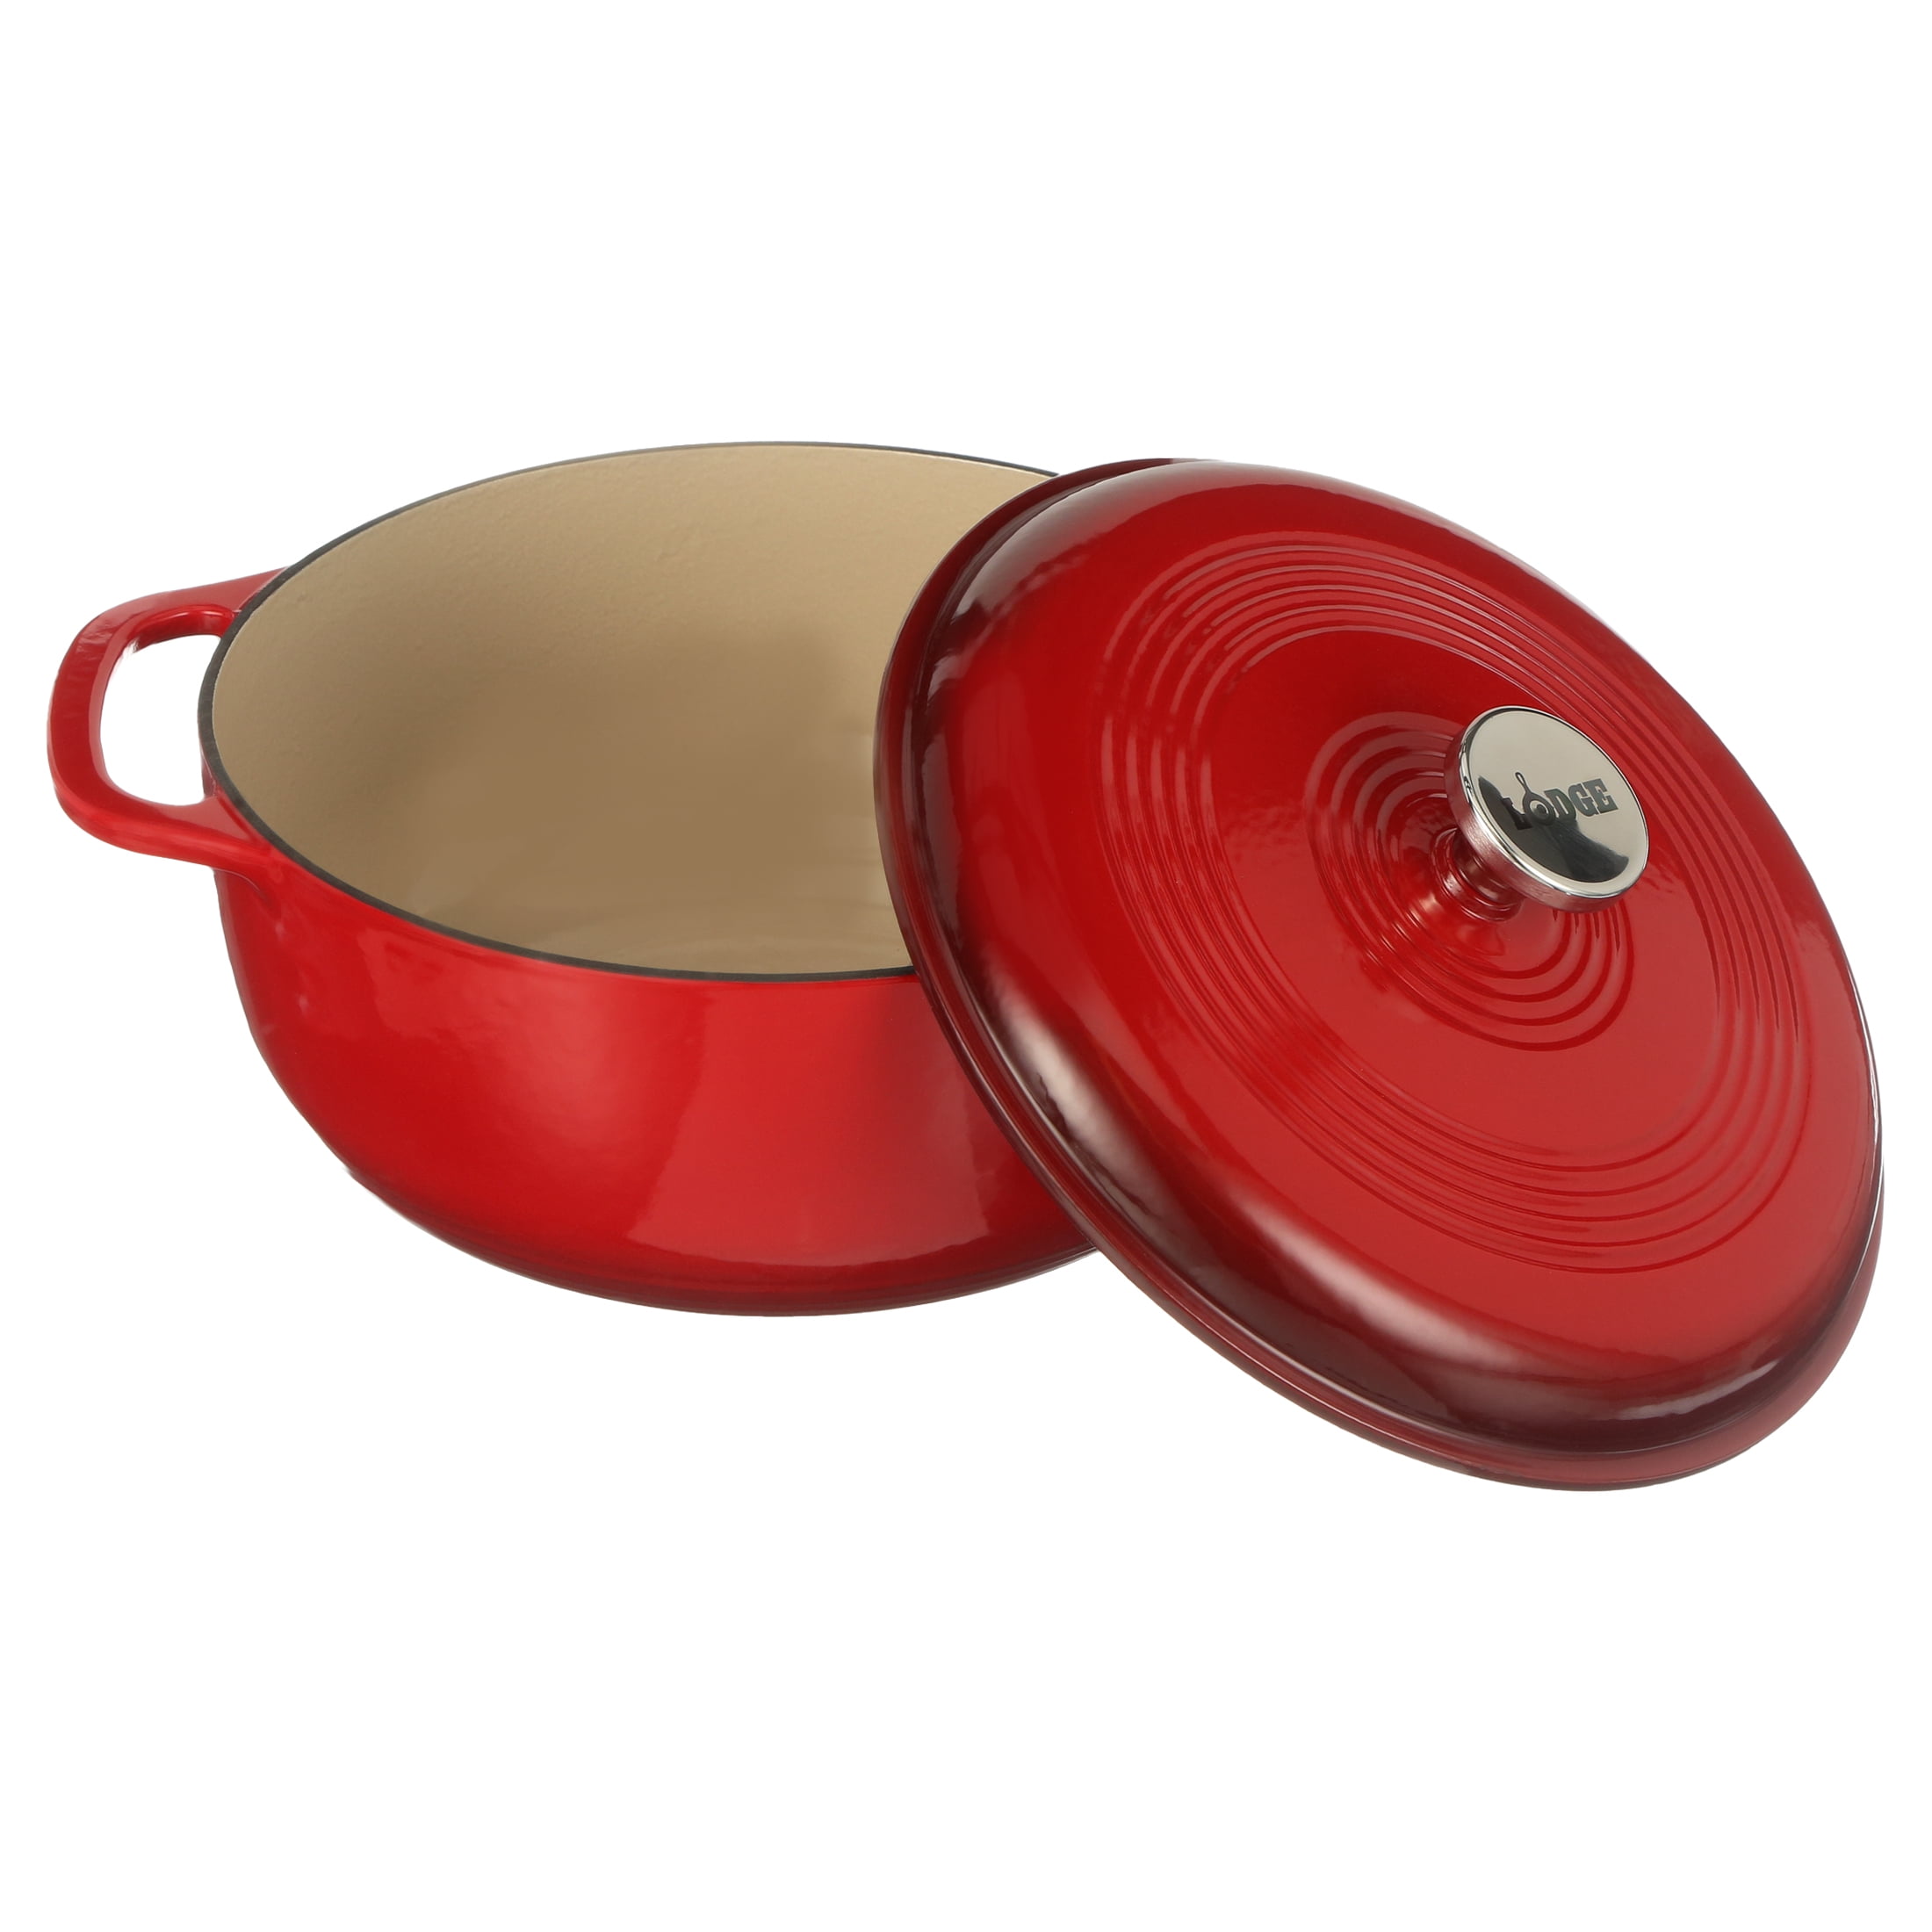 Lodge Enameled Cast Iron 4.6-Quart Dutch Oven, Red